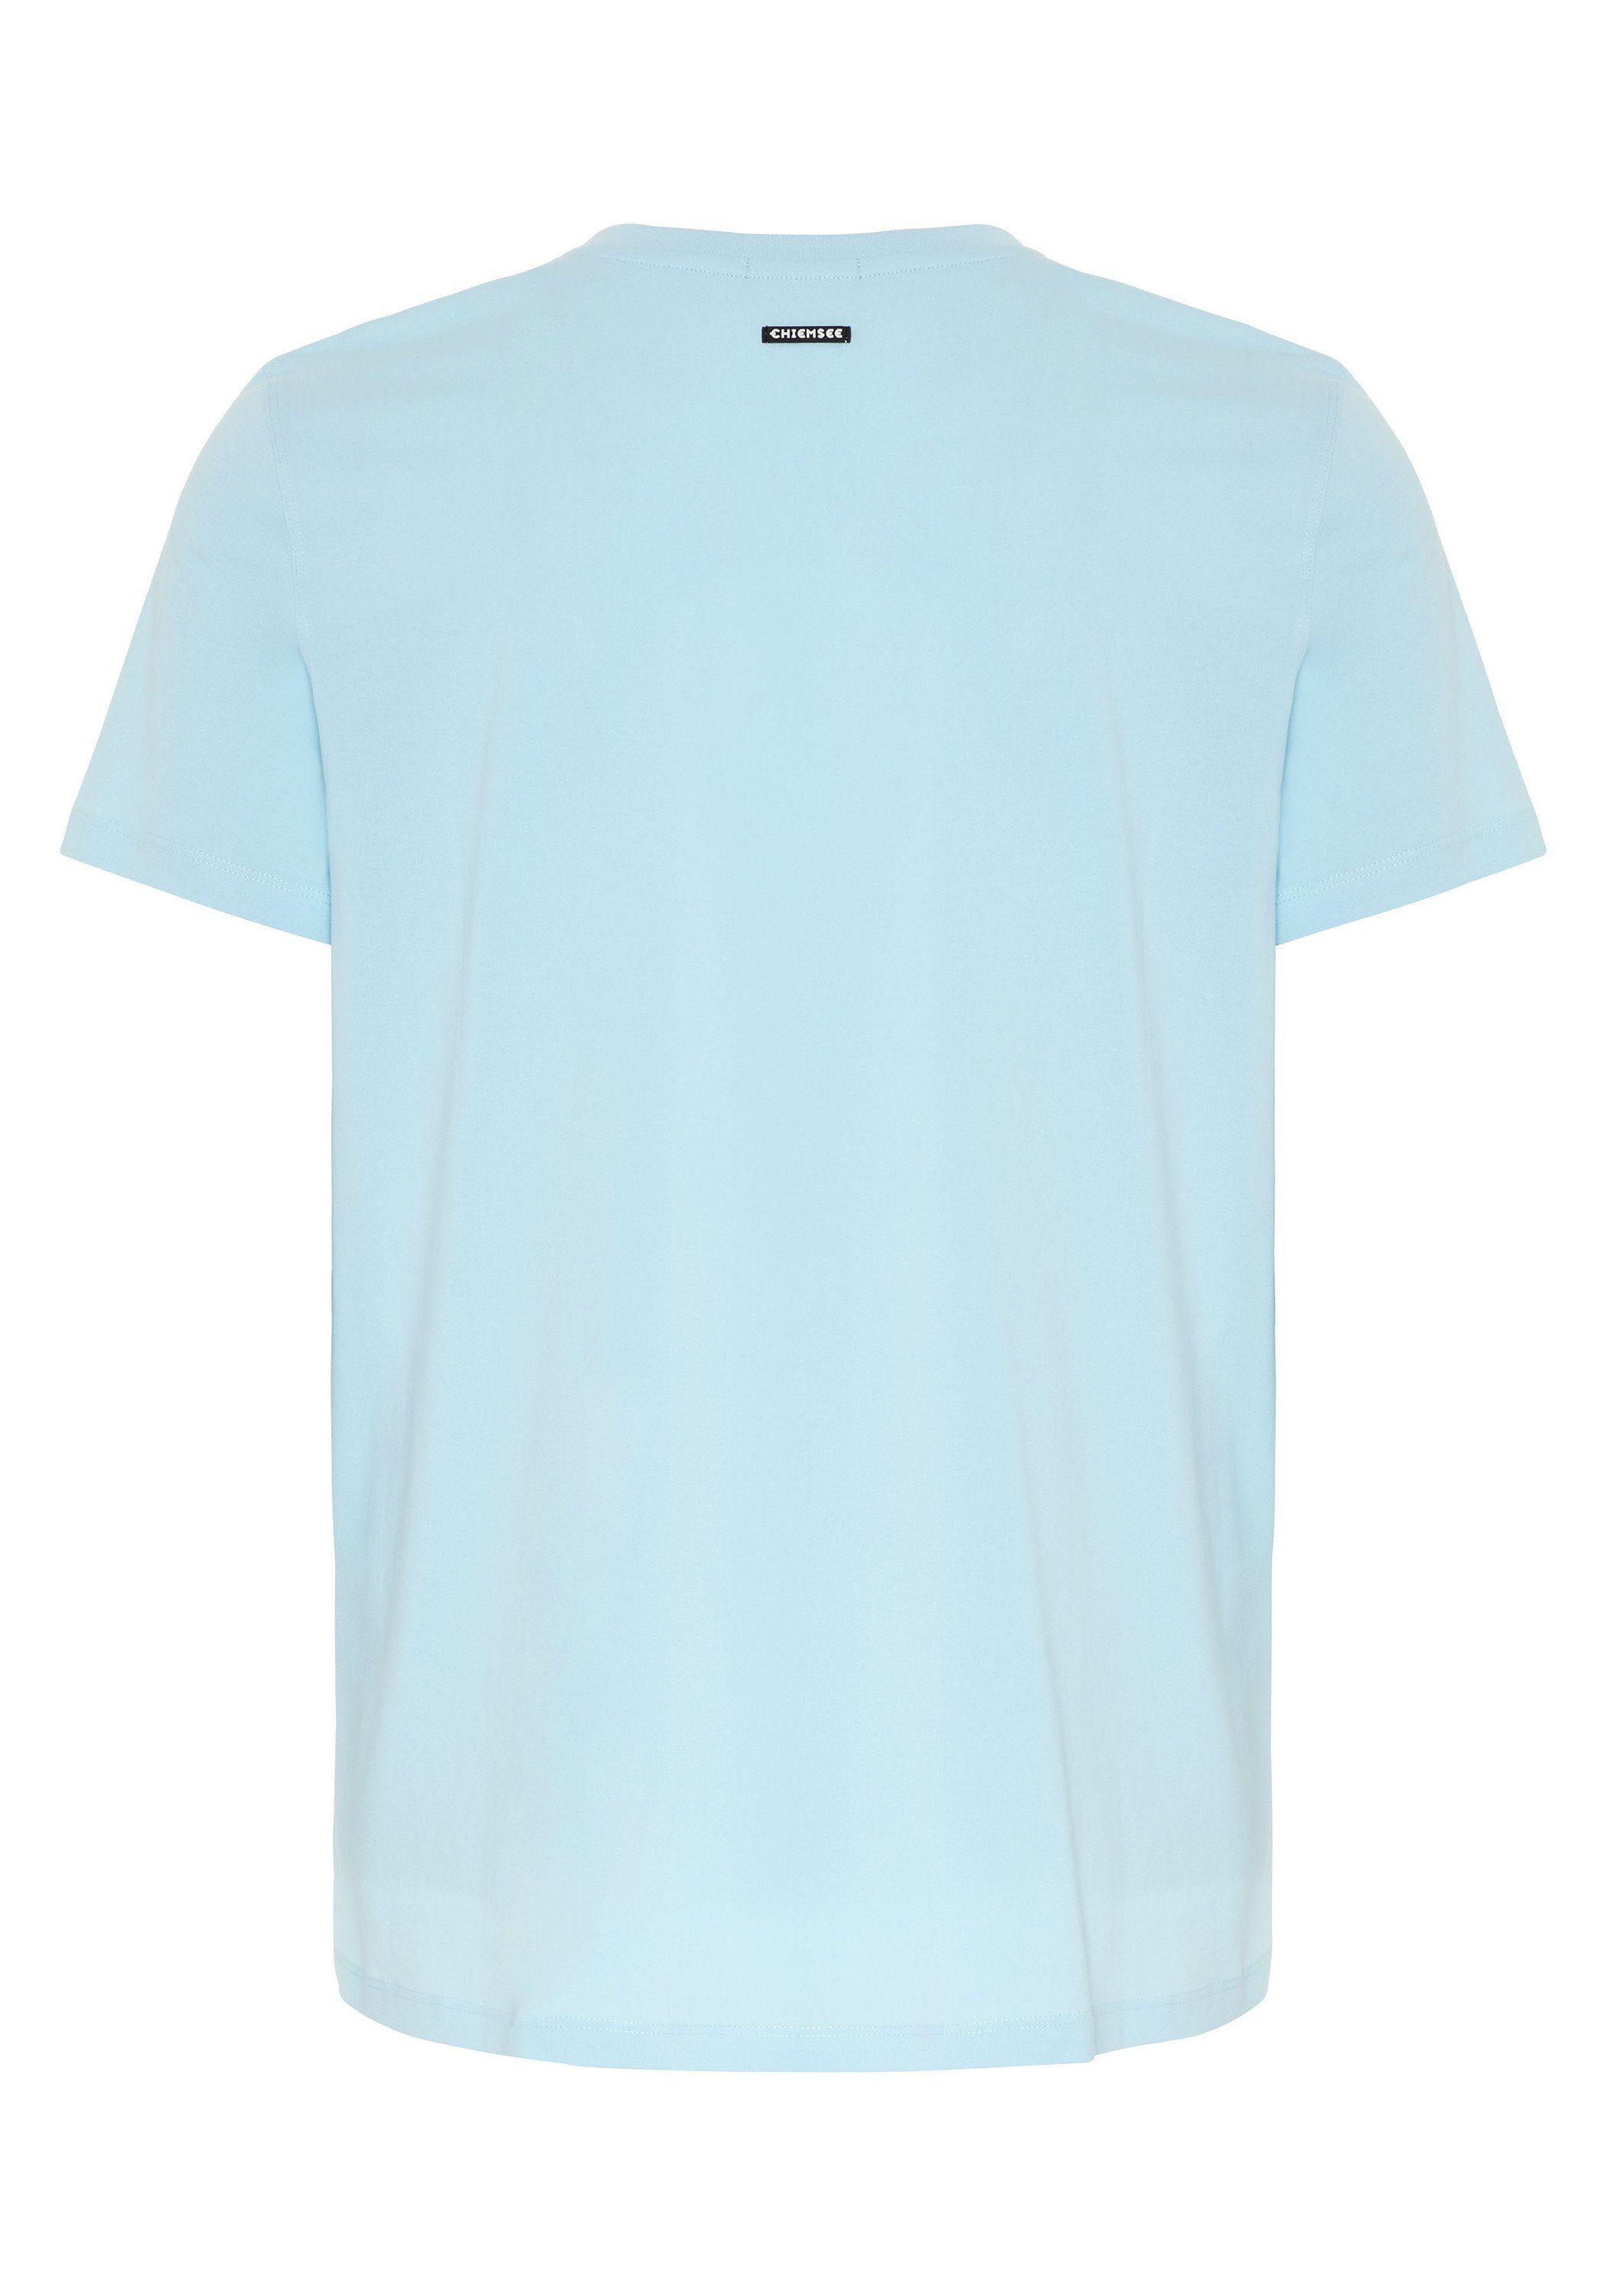 T-Shirt Print-Shirt Blue PLUS-MINUS-Print Chiemsee 1 mit Cool